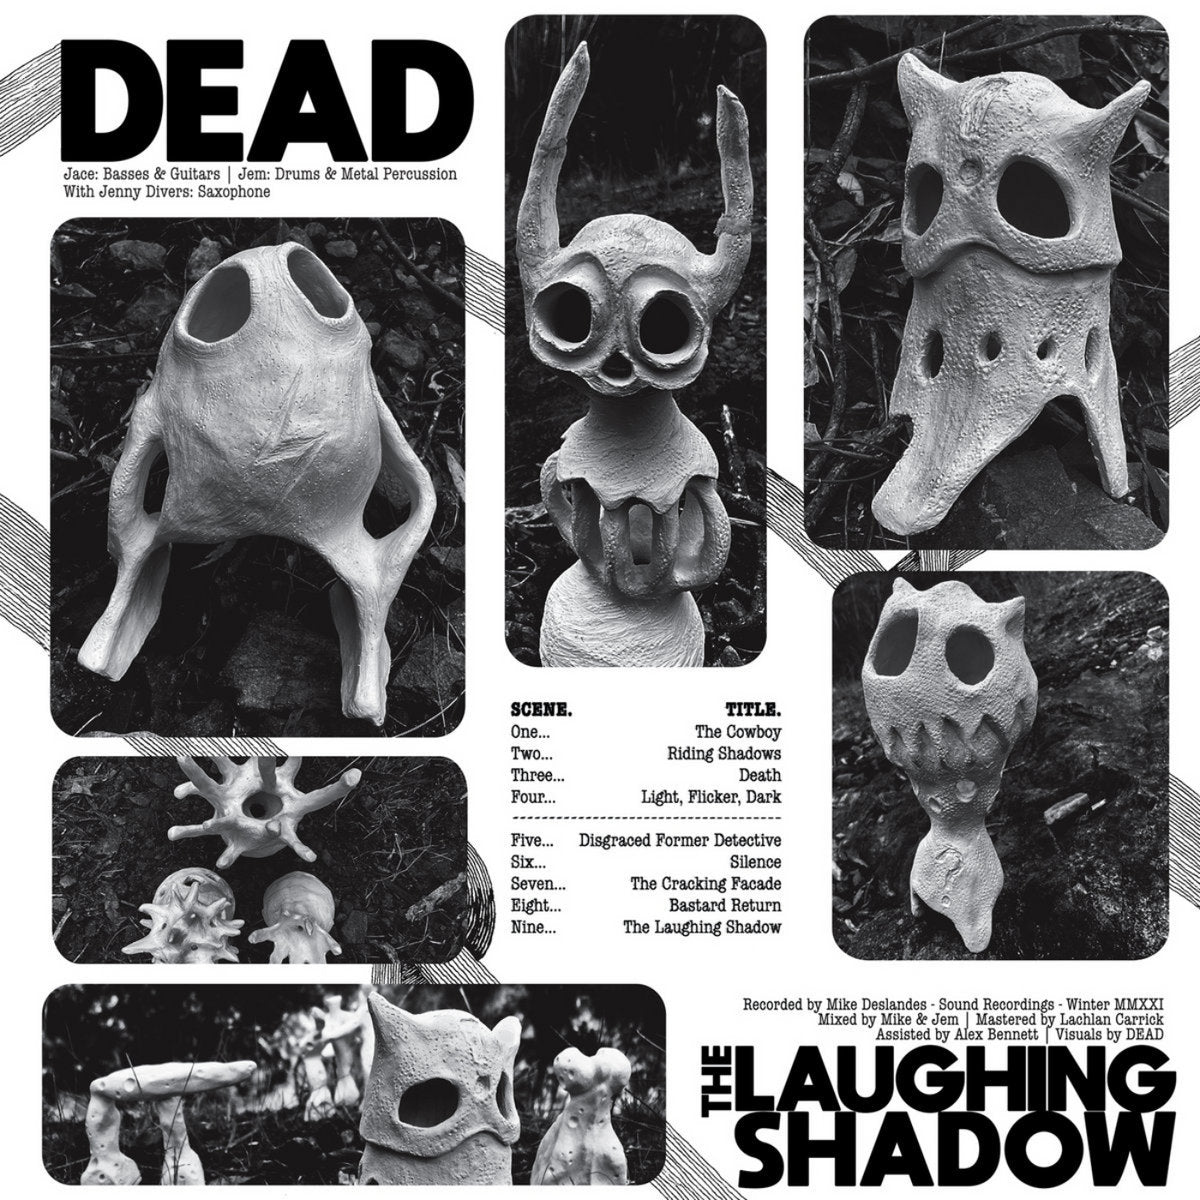 DEAD - "The Laughing Shadow" Black Vinyl LP